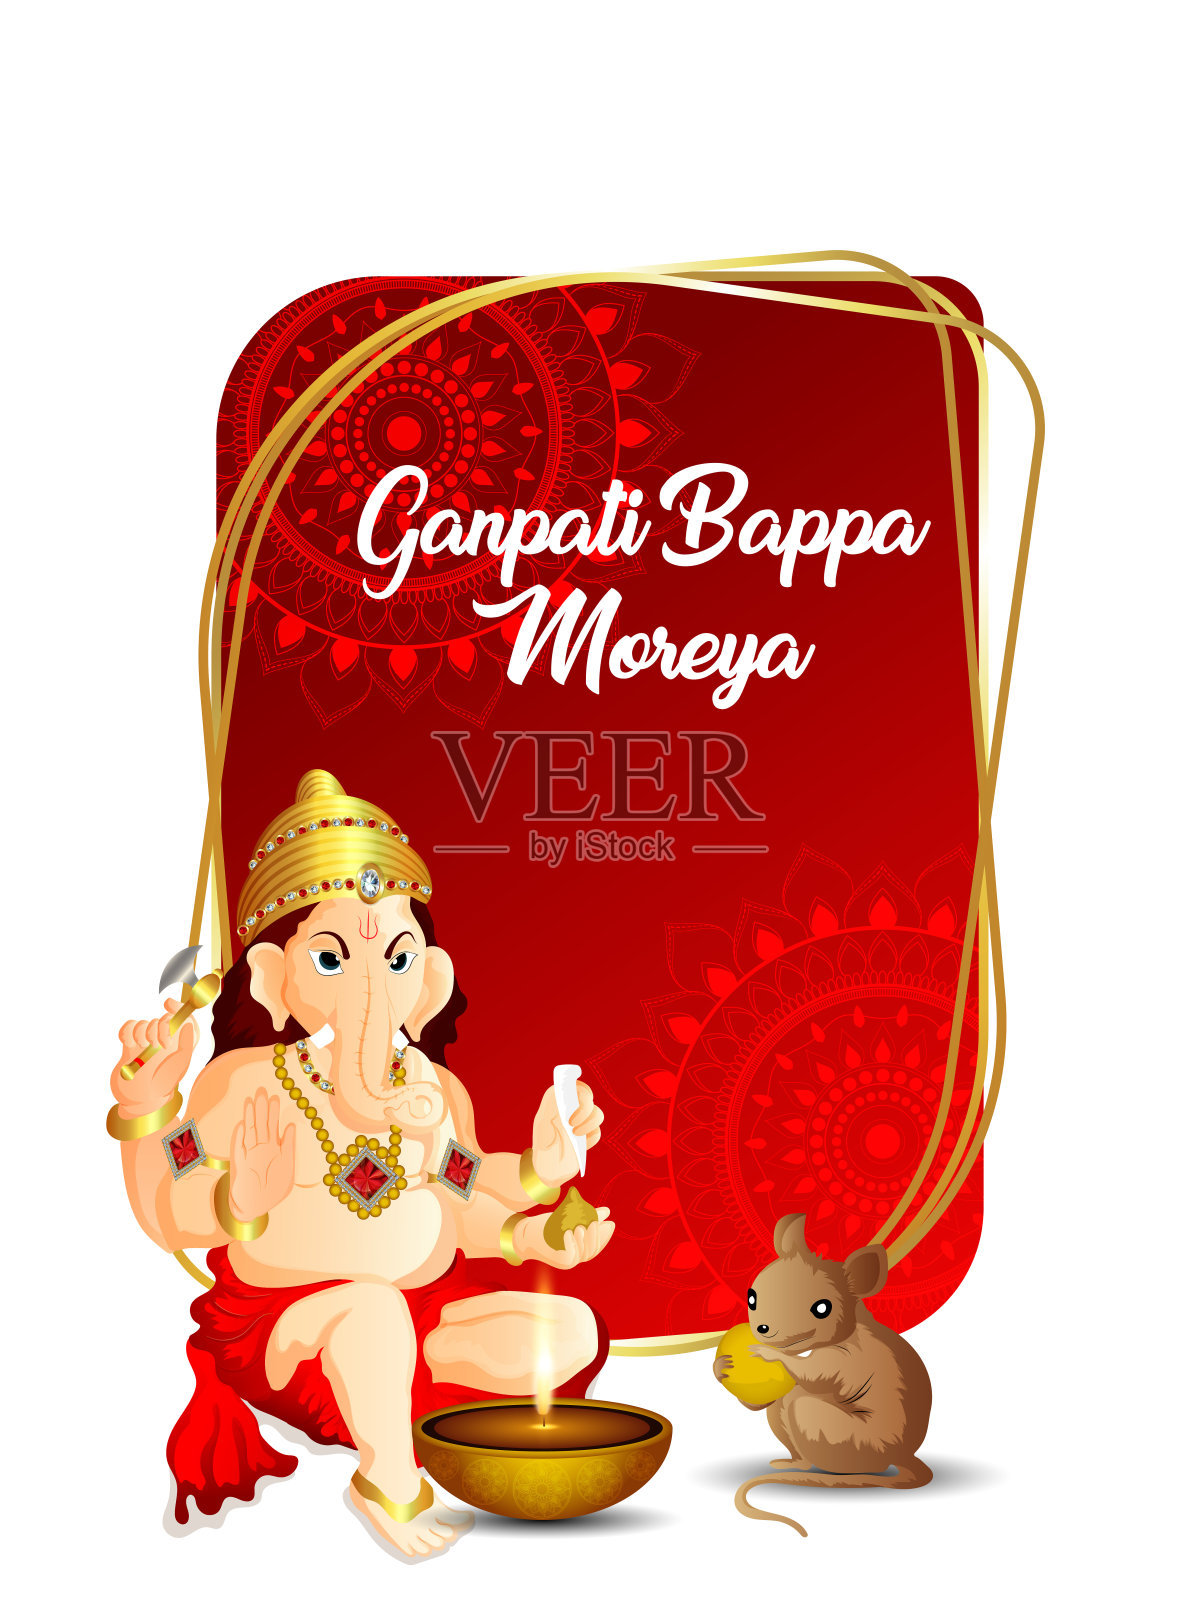 Ganpati bappa moreya庆典传单与主甘尼萨的矢量插图插画图片素材